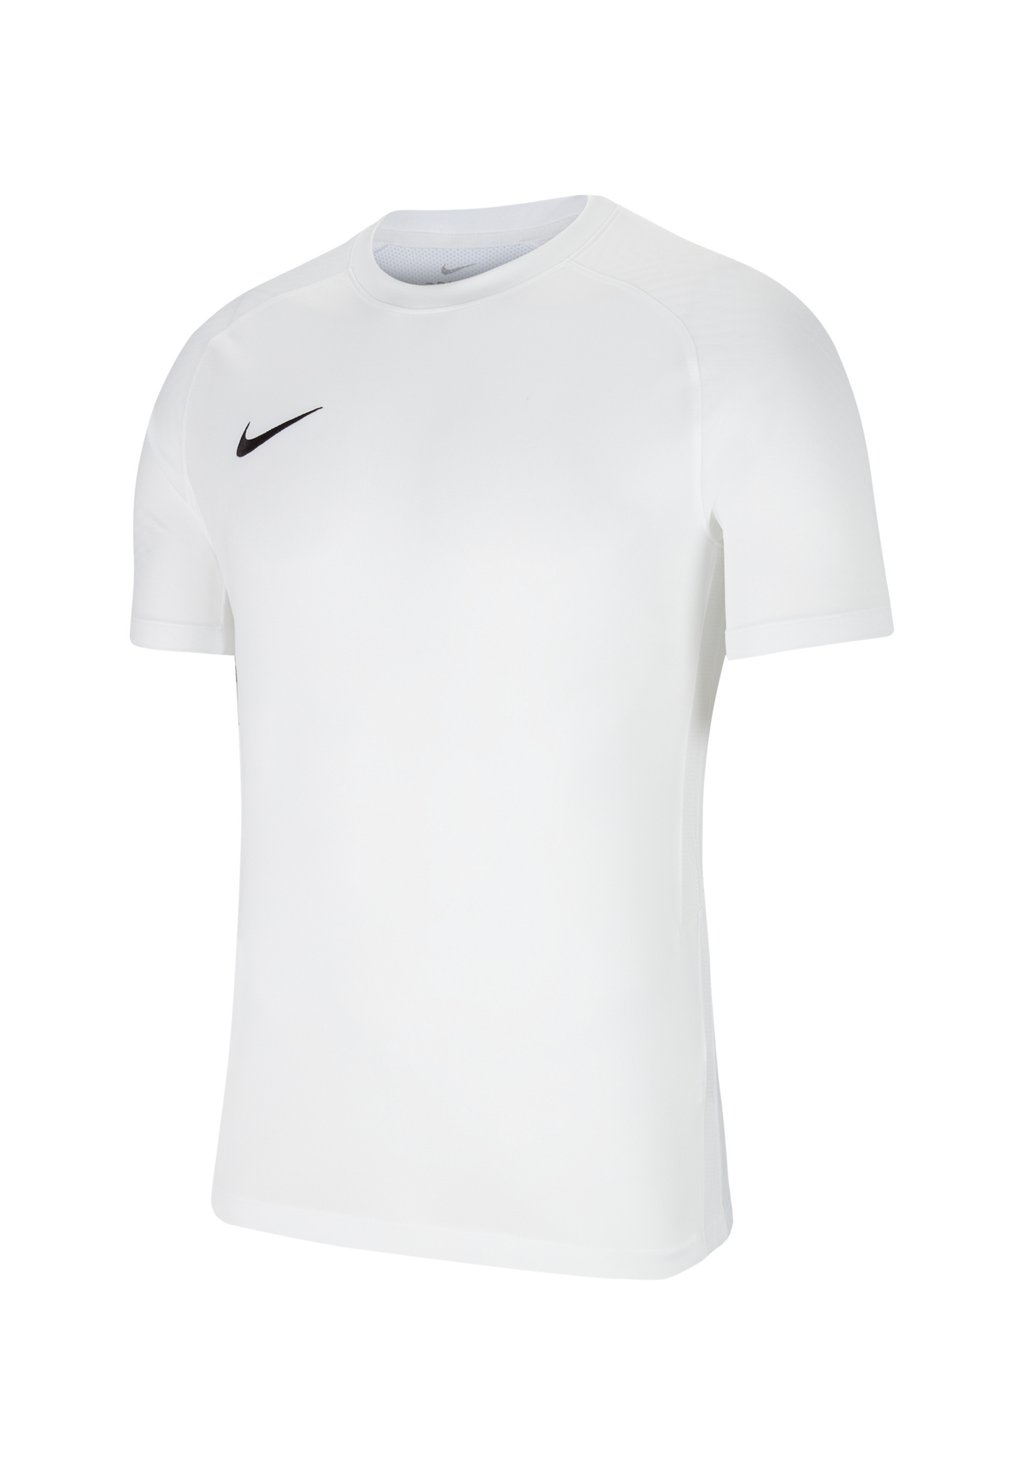 Футболка с принтом Nike, цвет weissschwarz футболка базовая teamsport nike цвет weissschwarz